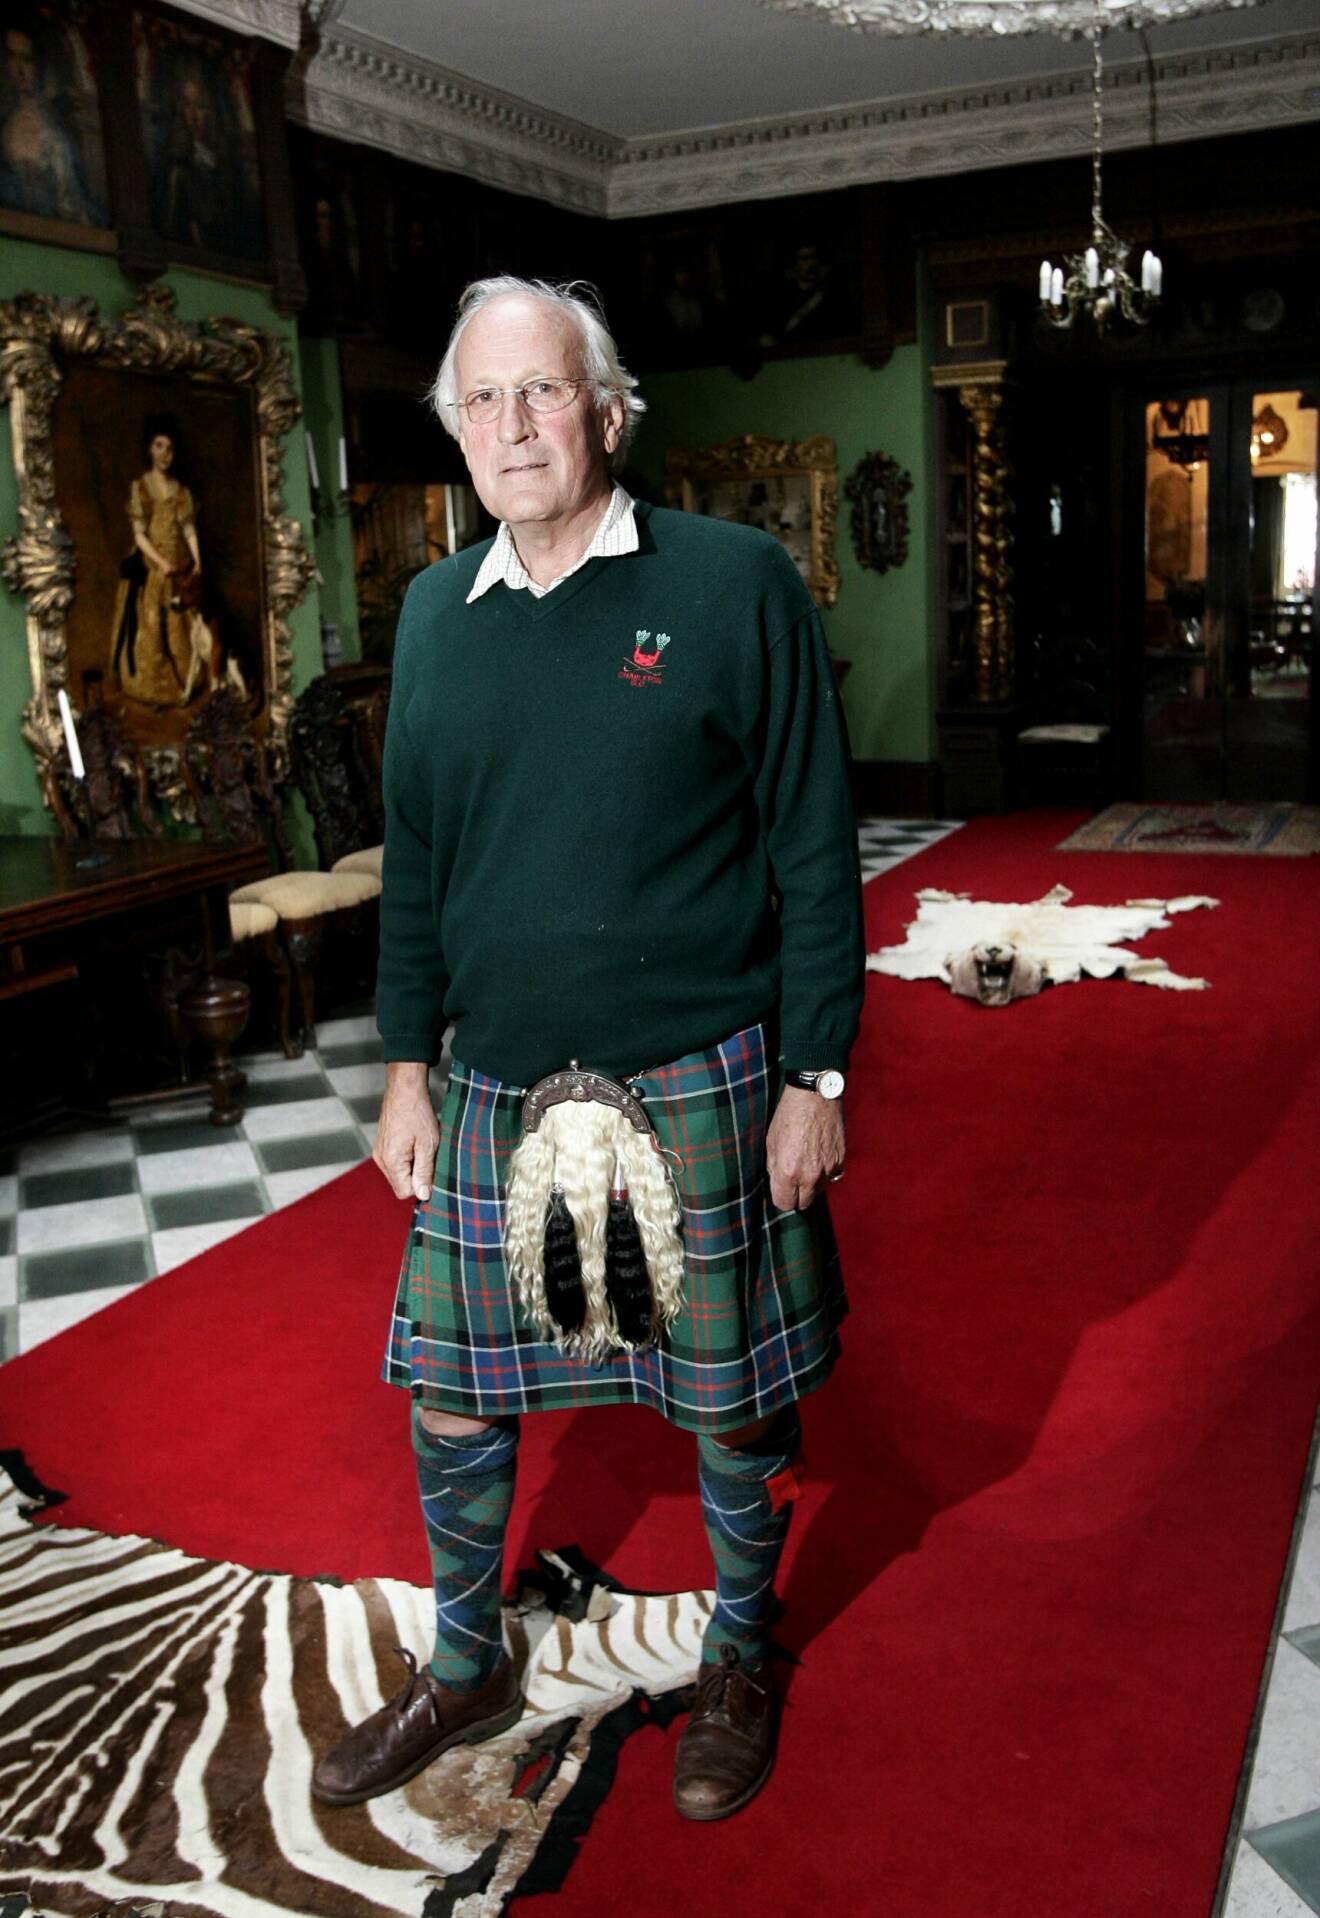 Jöns St.Clair Bonde kungens jaktkompis Charleton House Skottland